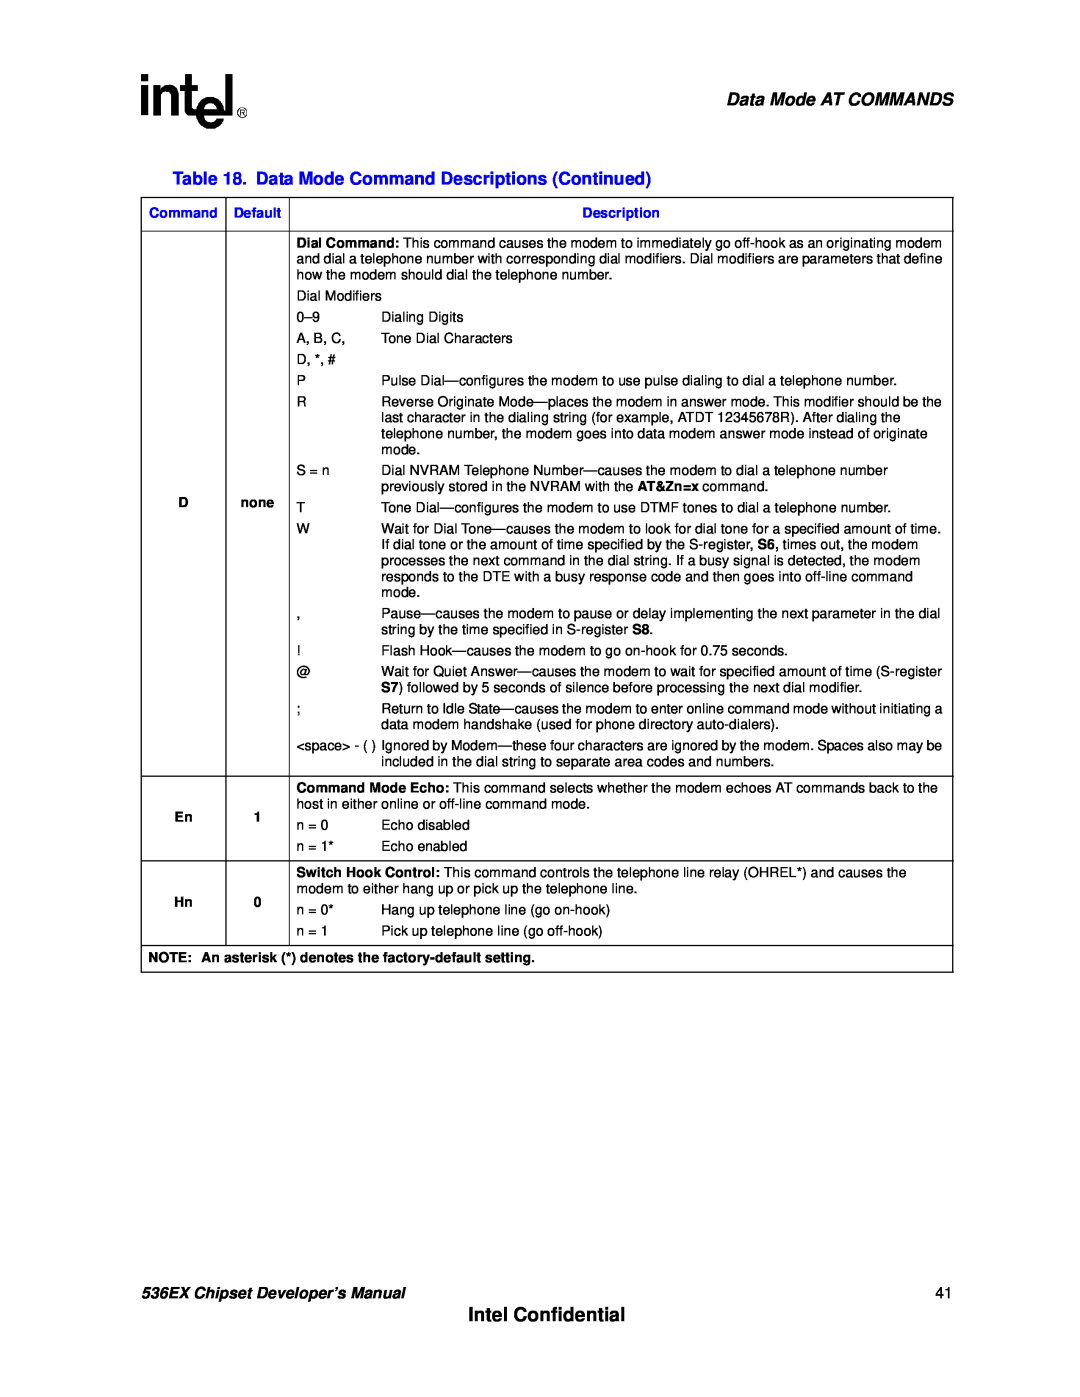 Intel manual Intel Confidential, Data Mode AT COMMANDS, 536EX Chipset Developer’s Manual 